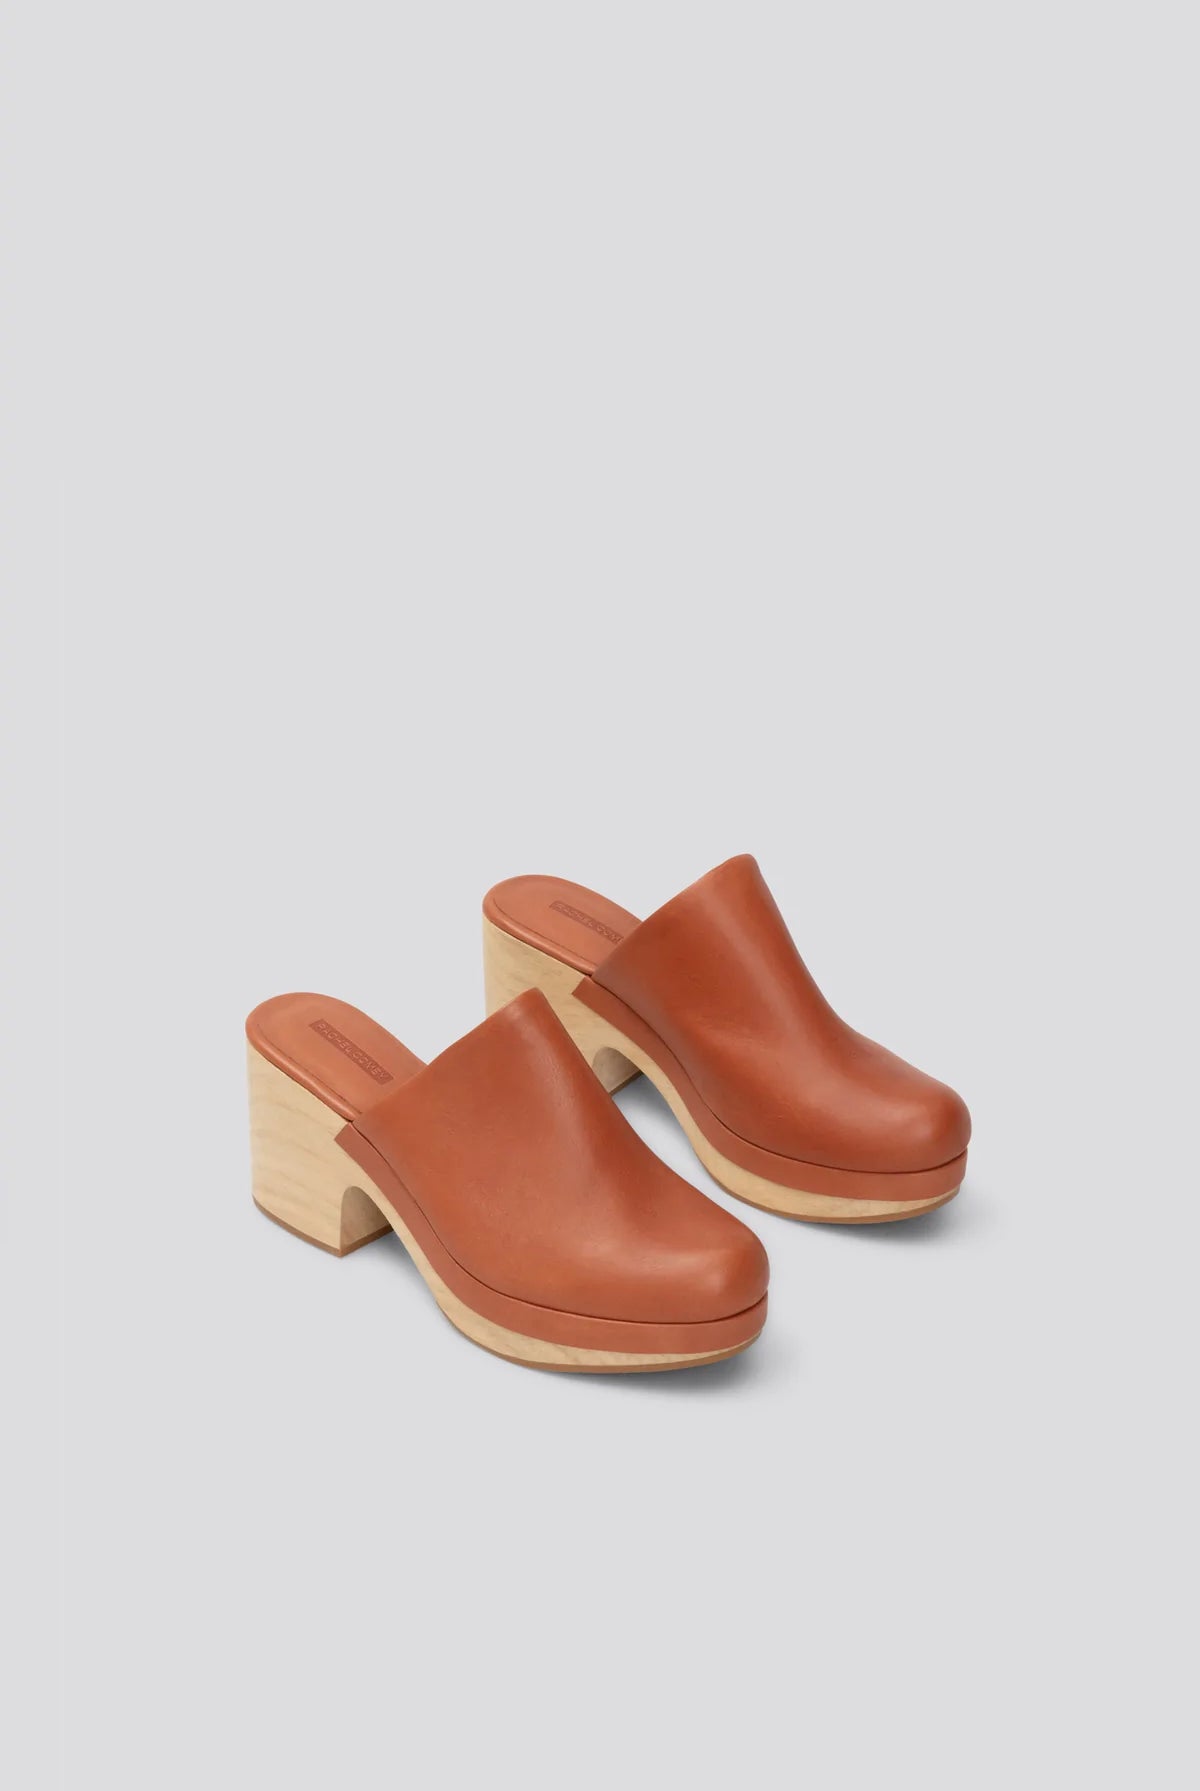 Rachel Comey | Bose Clog In Natural - SHOP YUCCA Shoes RACHEL COMEY - YUCCA 